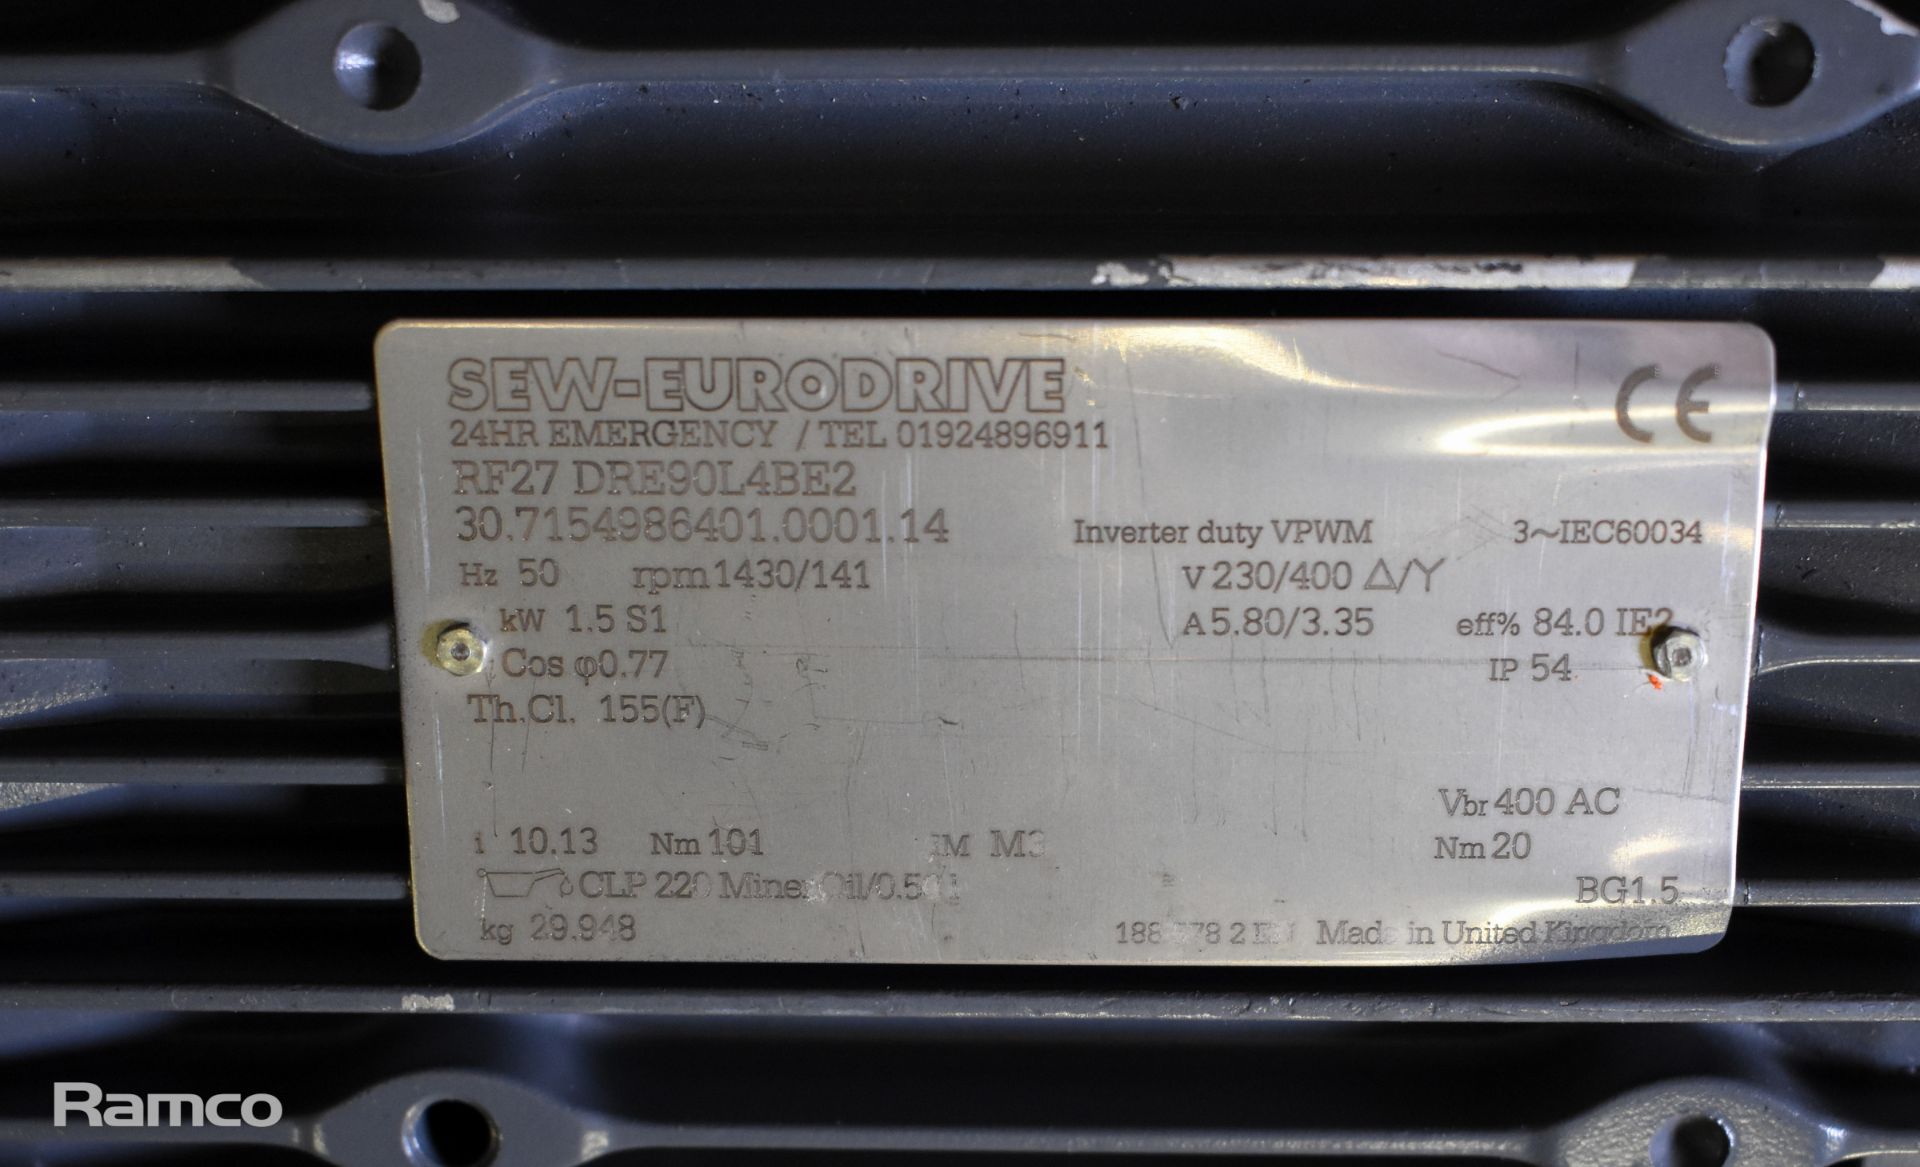 3x SEW-Eurodrive - RF27 DRN90L4BE2 electric gear motors - 1430/141rpm, 1.5kW, 230/400V, 5.80/3.35A - Image 4 of 6